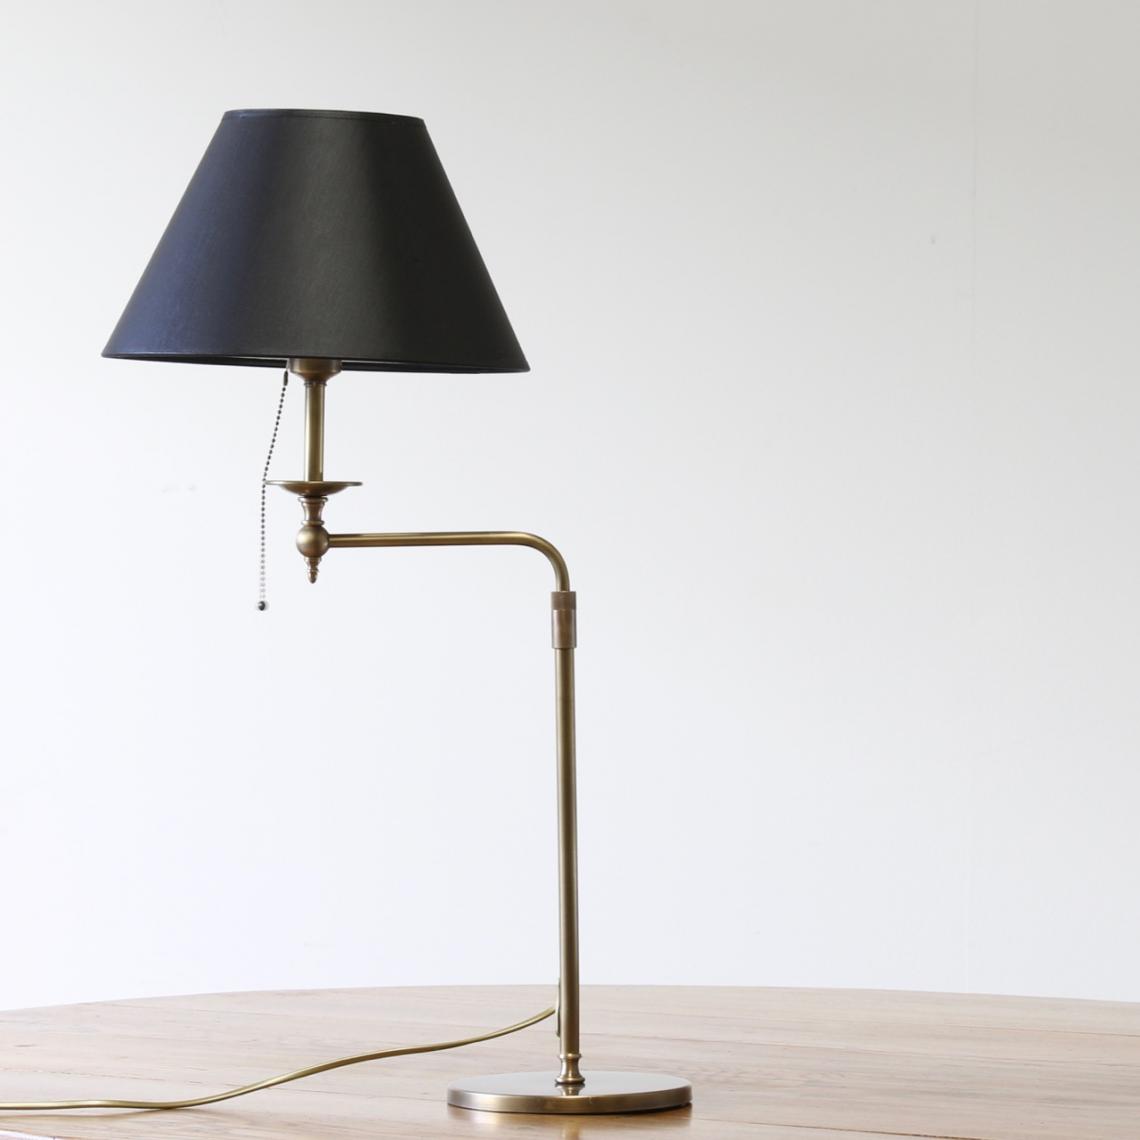 115-59 - Turnbridge Table Lamp